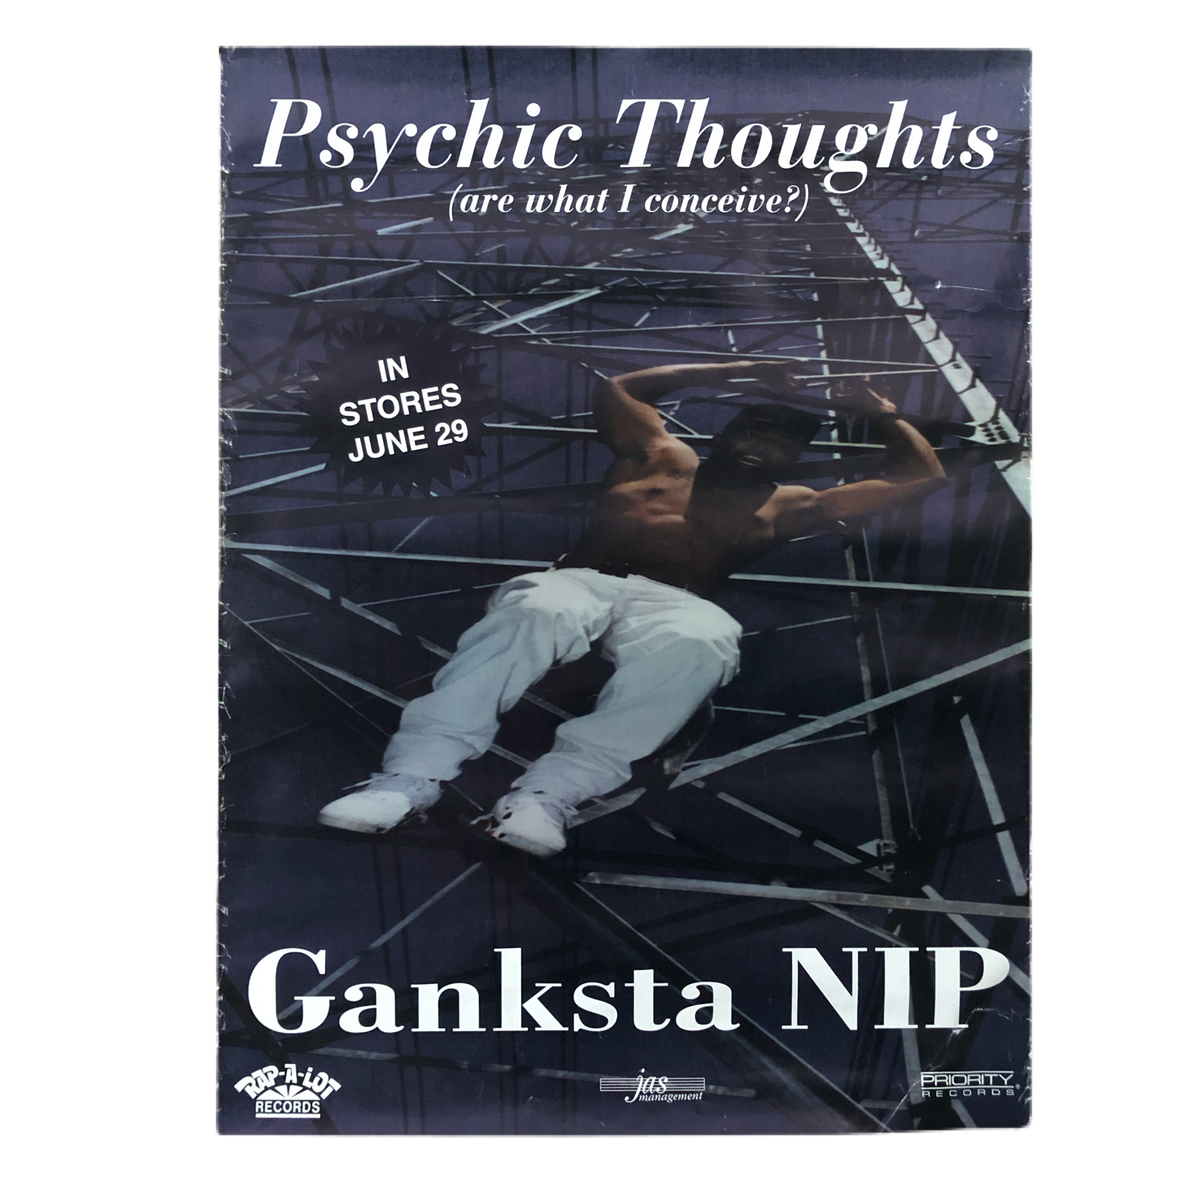 Vintage Rap-A-Lot Records Ganksta NIP &quot;Psychic Thoughts&quot; Promotional Poster